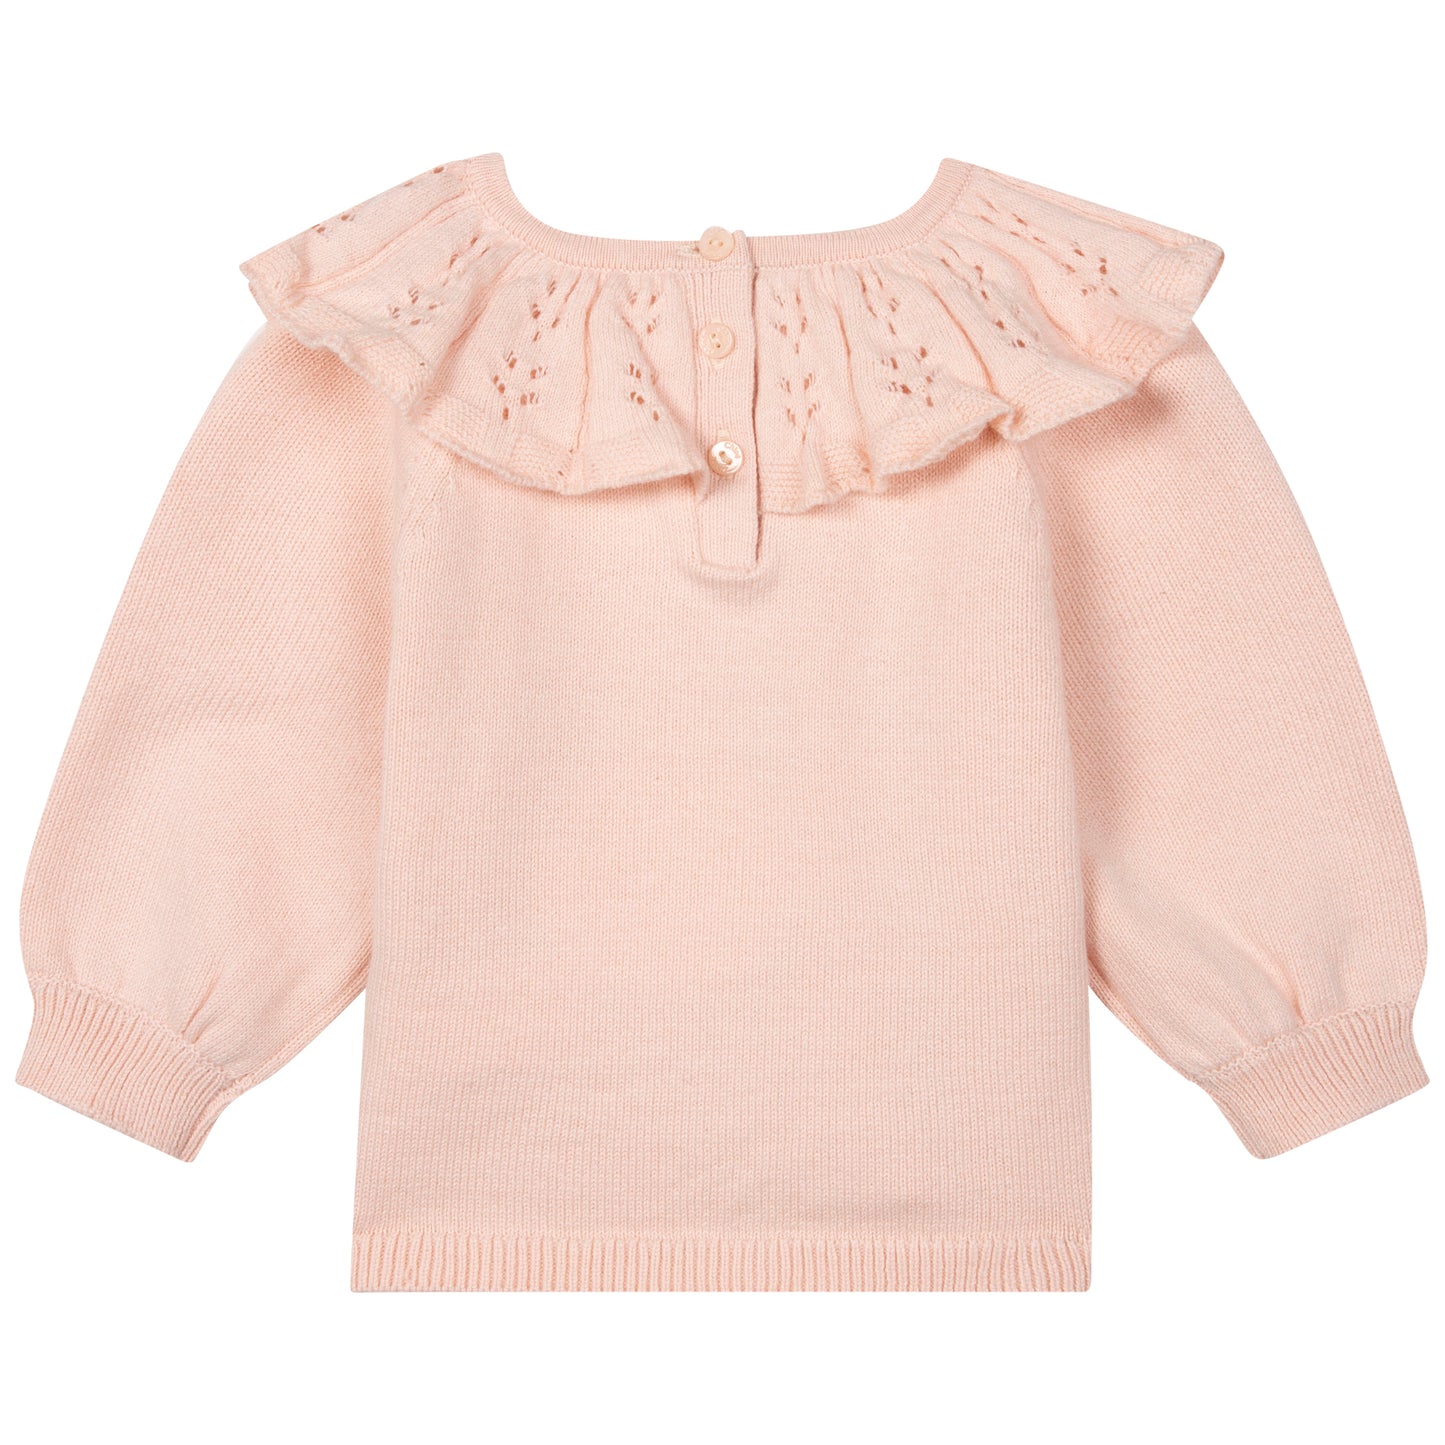 Chloe Baby Girl Knitted Sweater Set